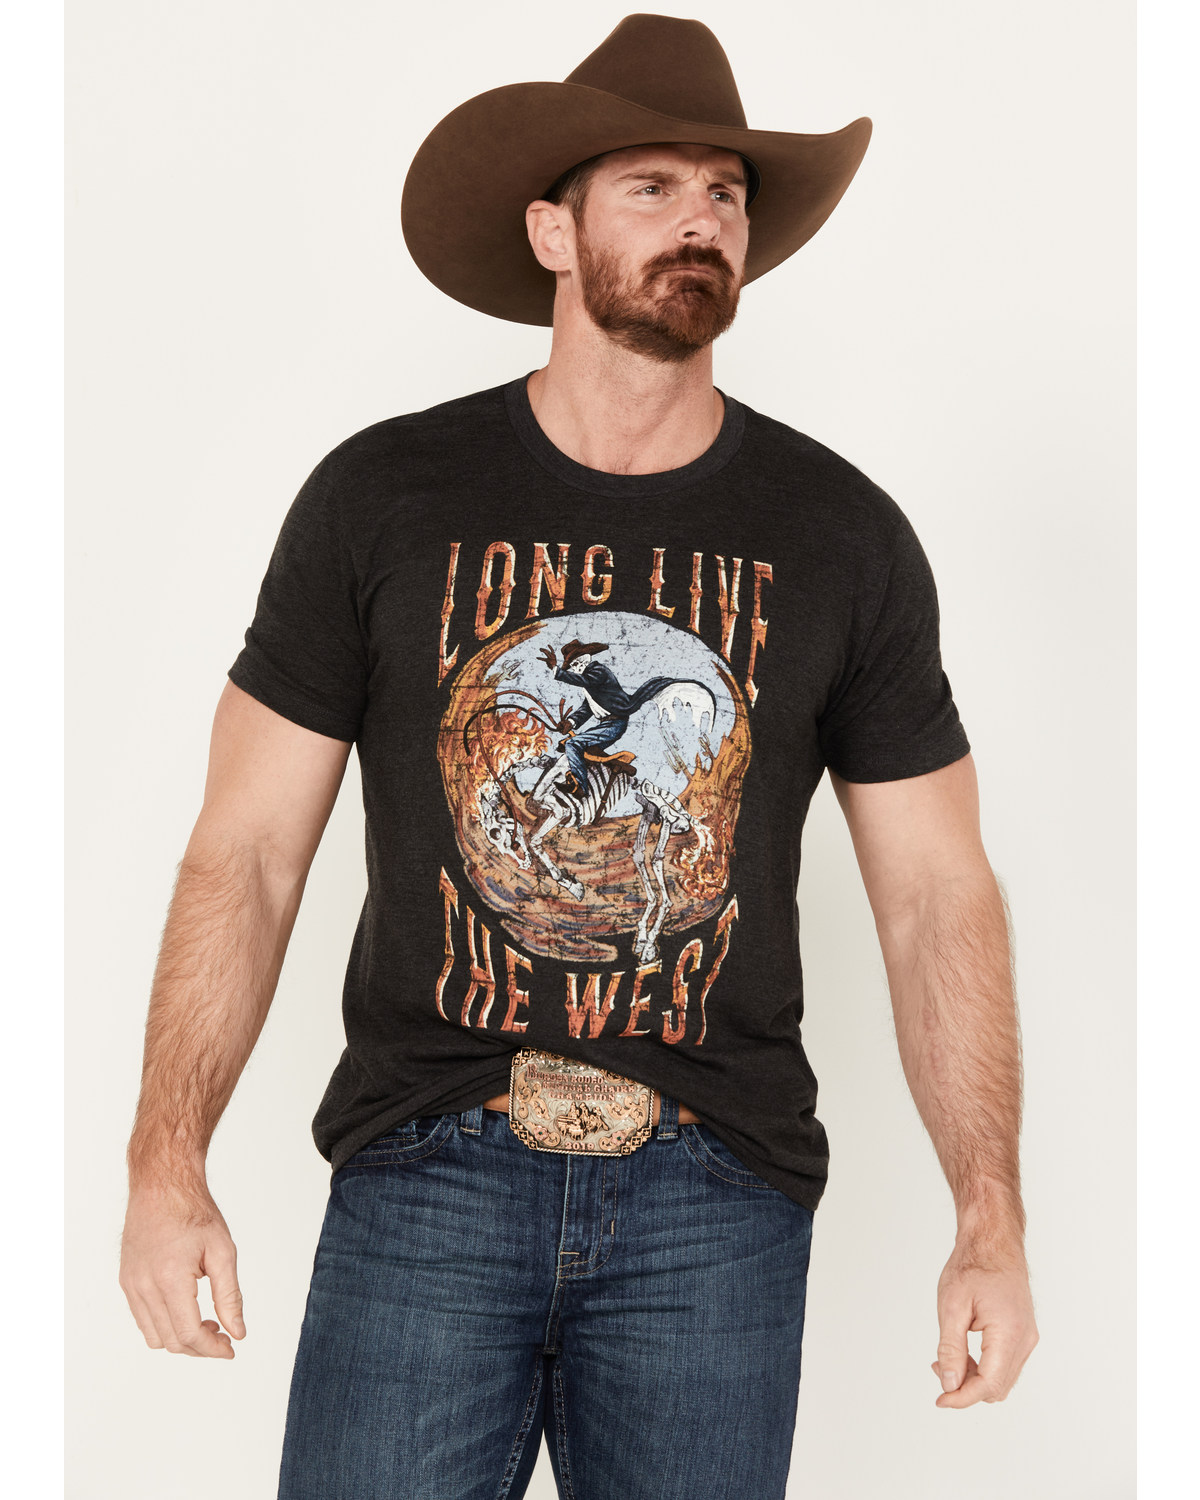 Cody James Men's Long Live Short Sleeve Graphic T-Shirt